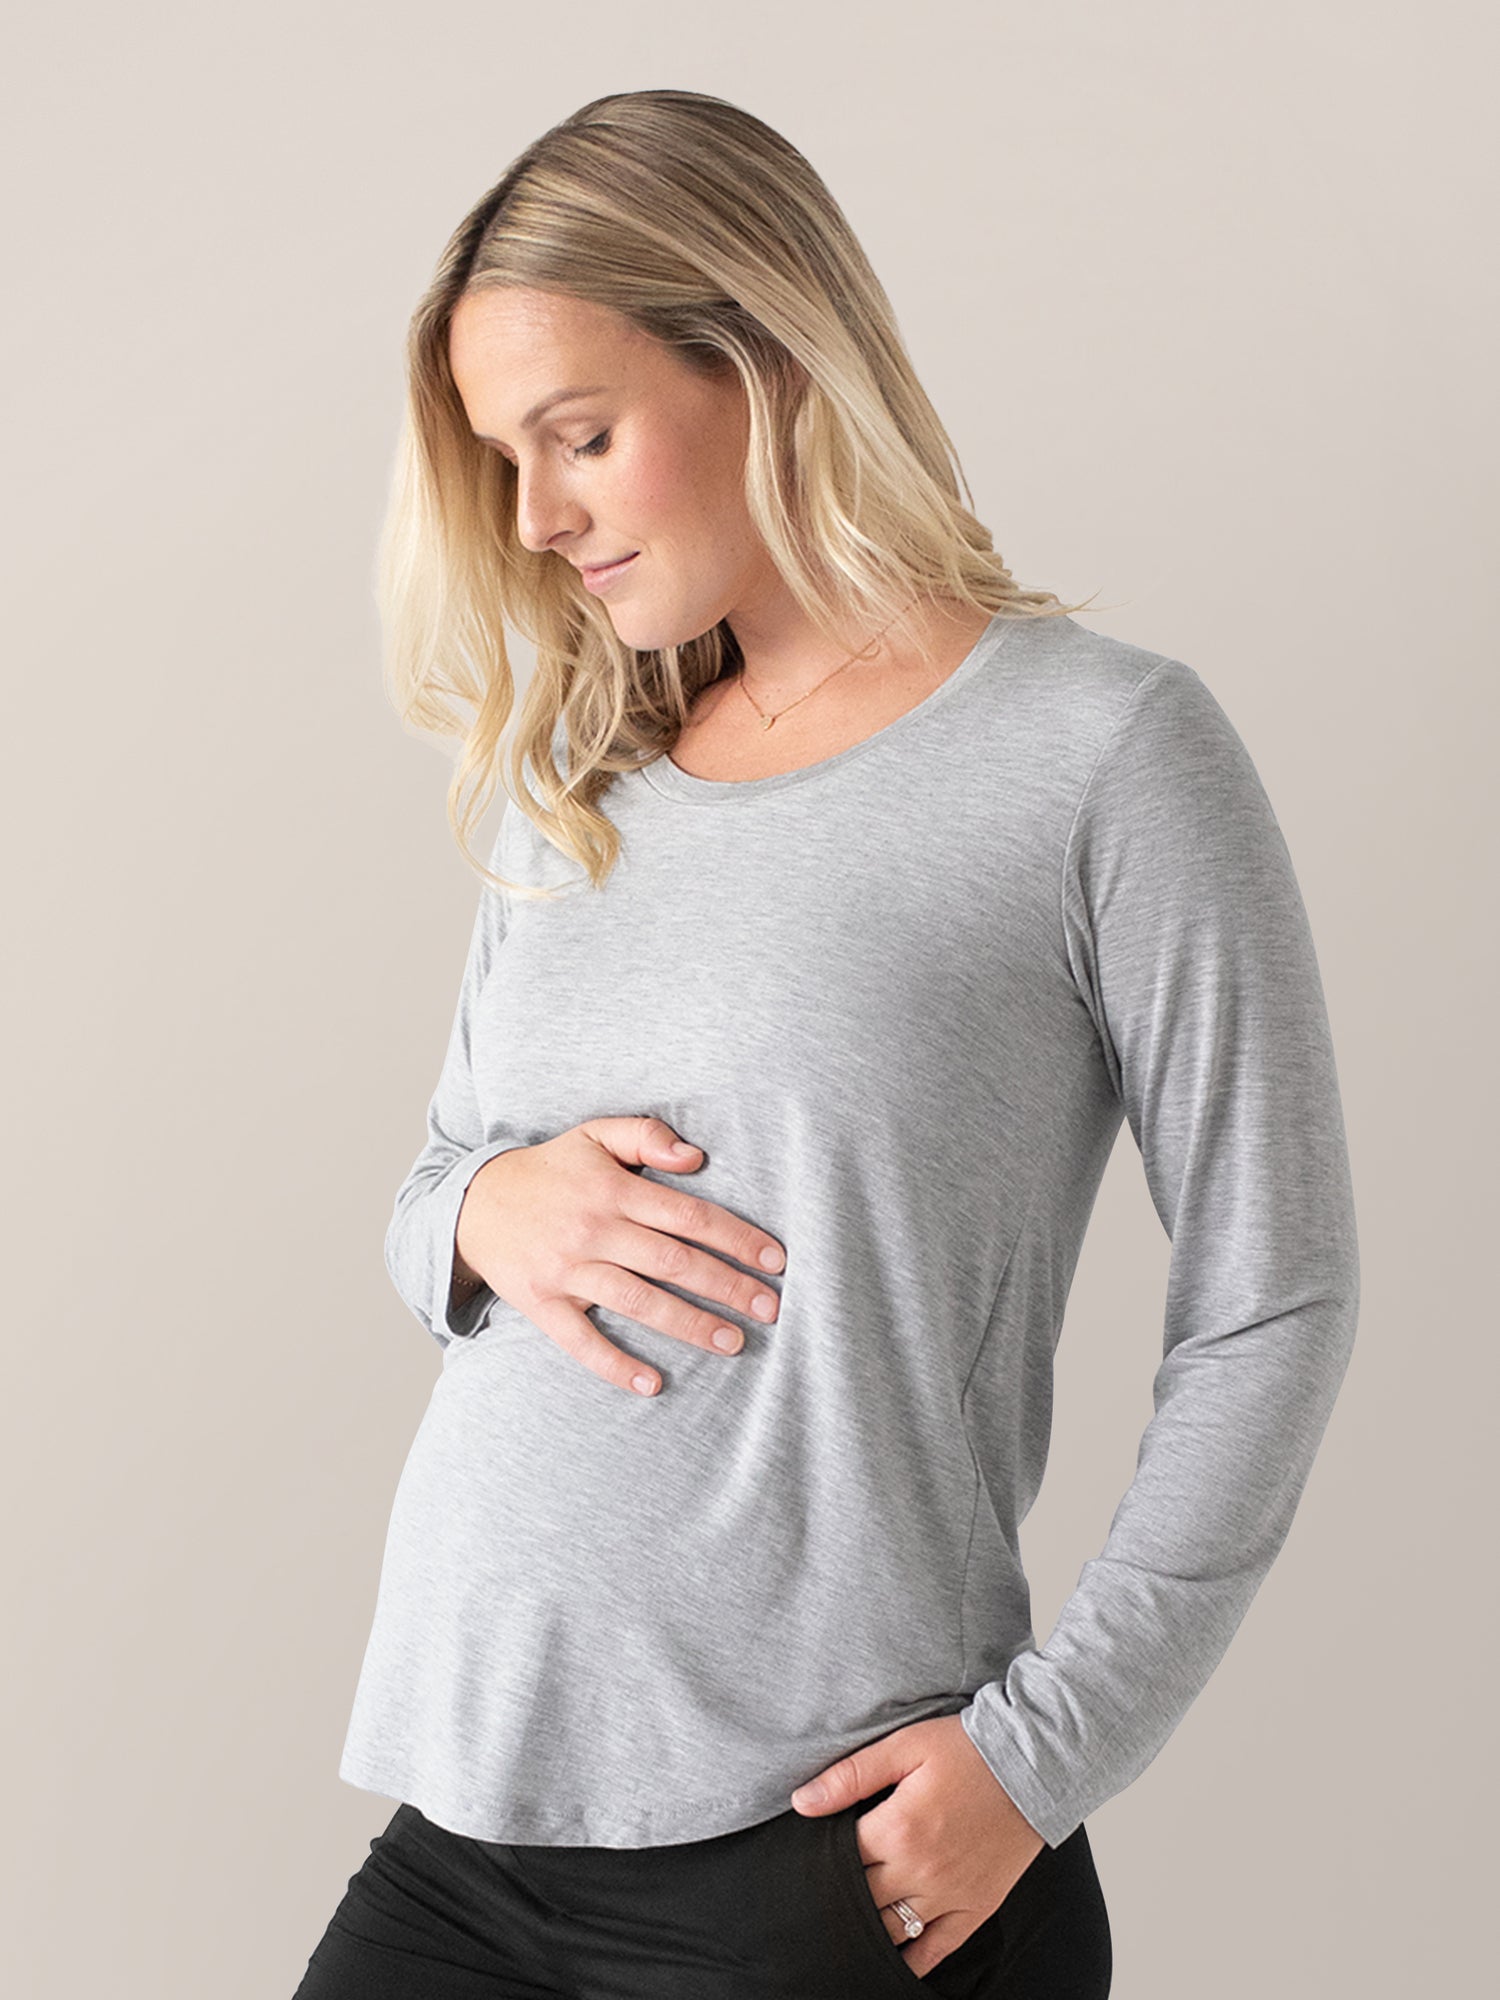 Kindred Bravely Long Sleeve Maternity/Nursing T-Shirt in Grey Heather